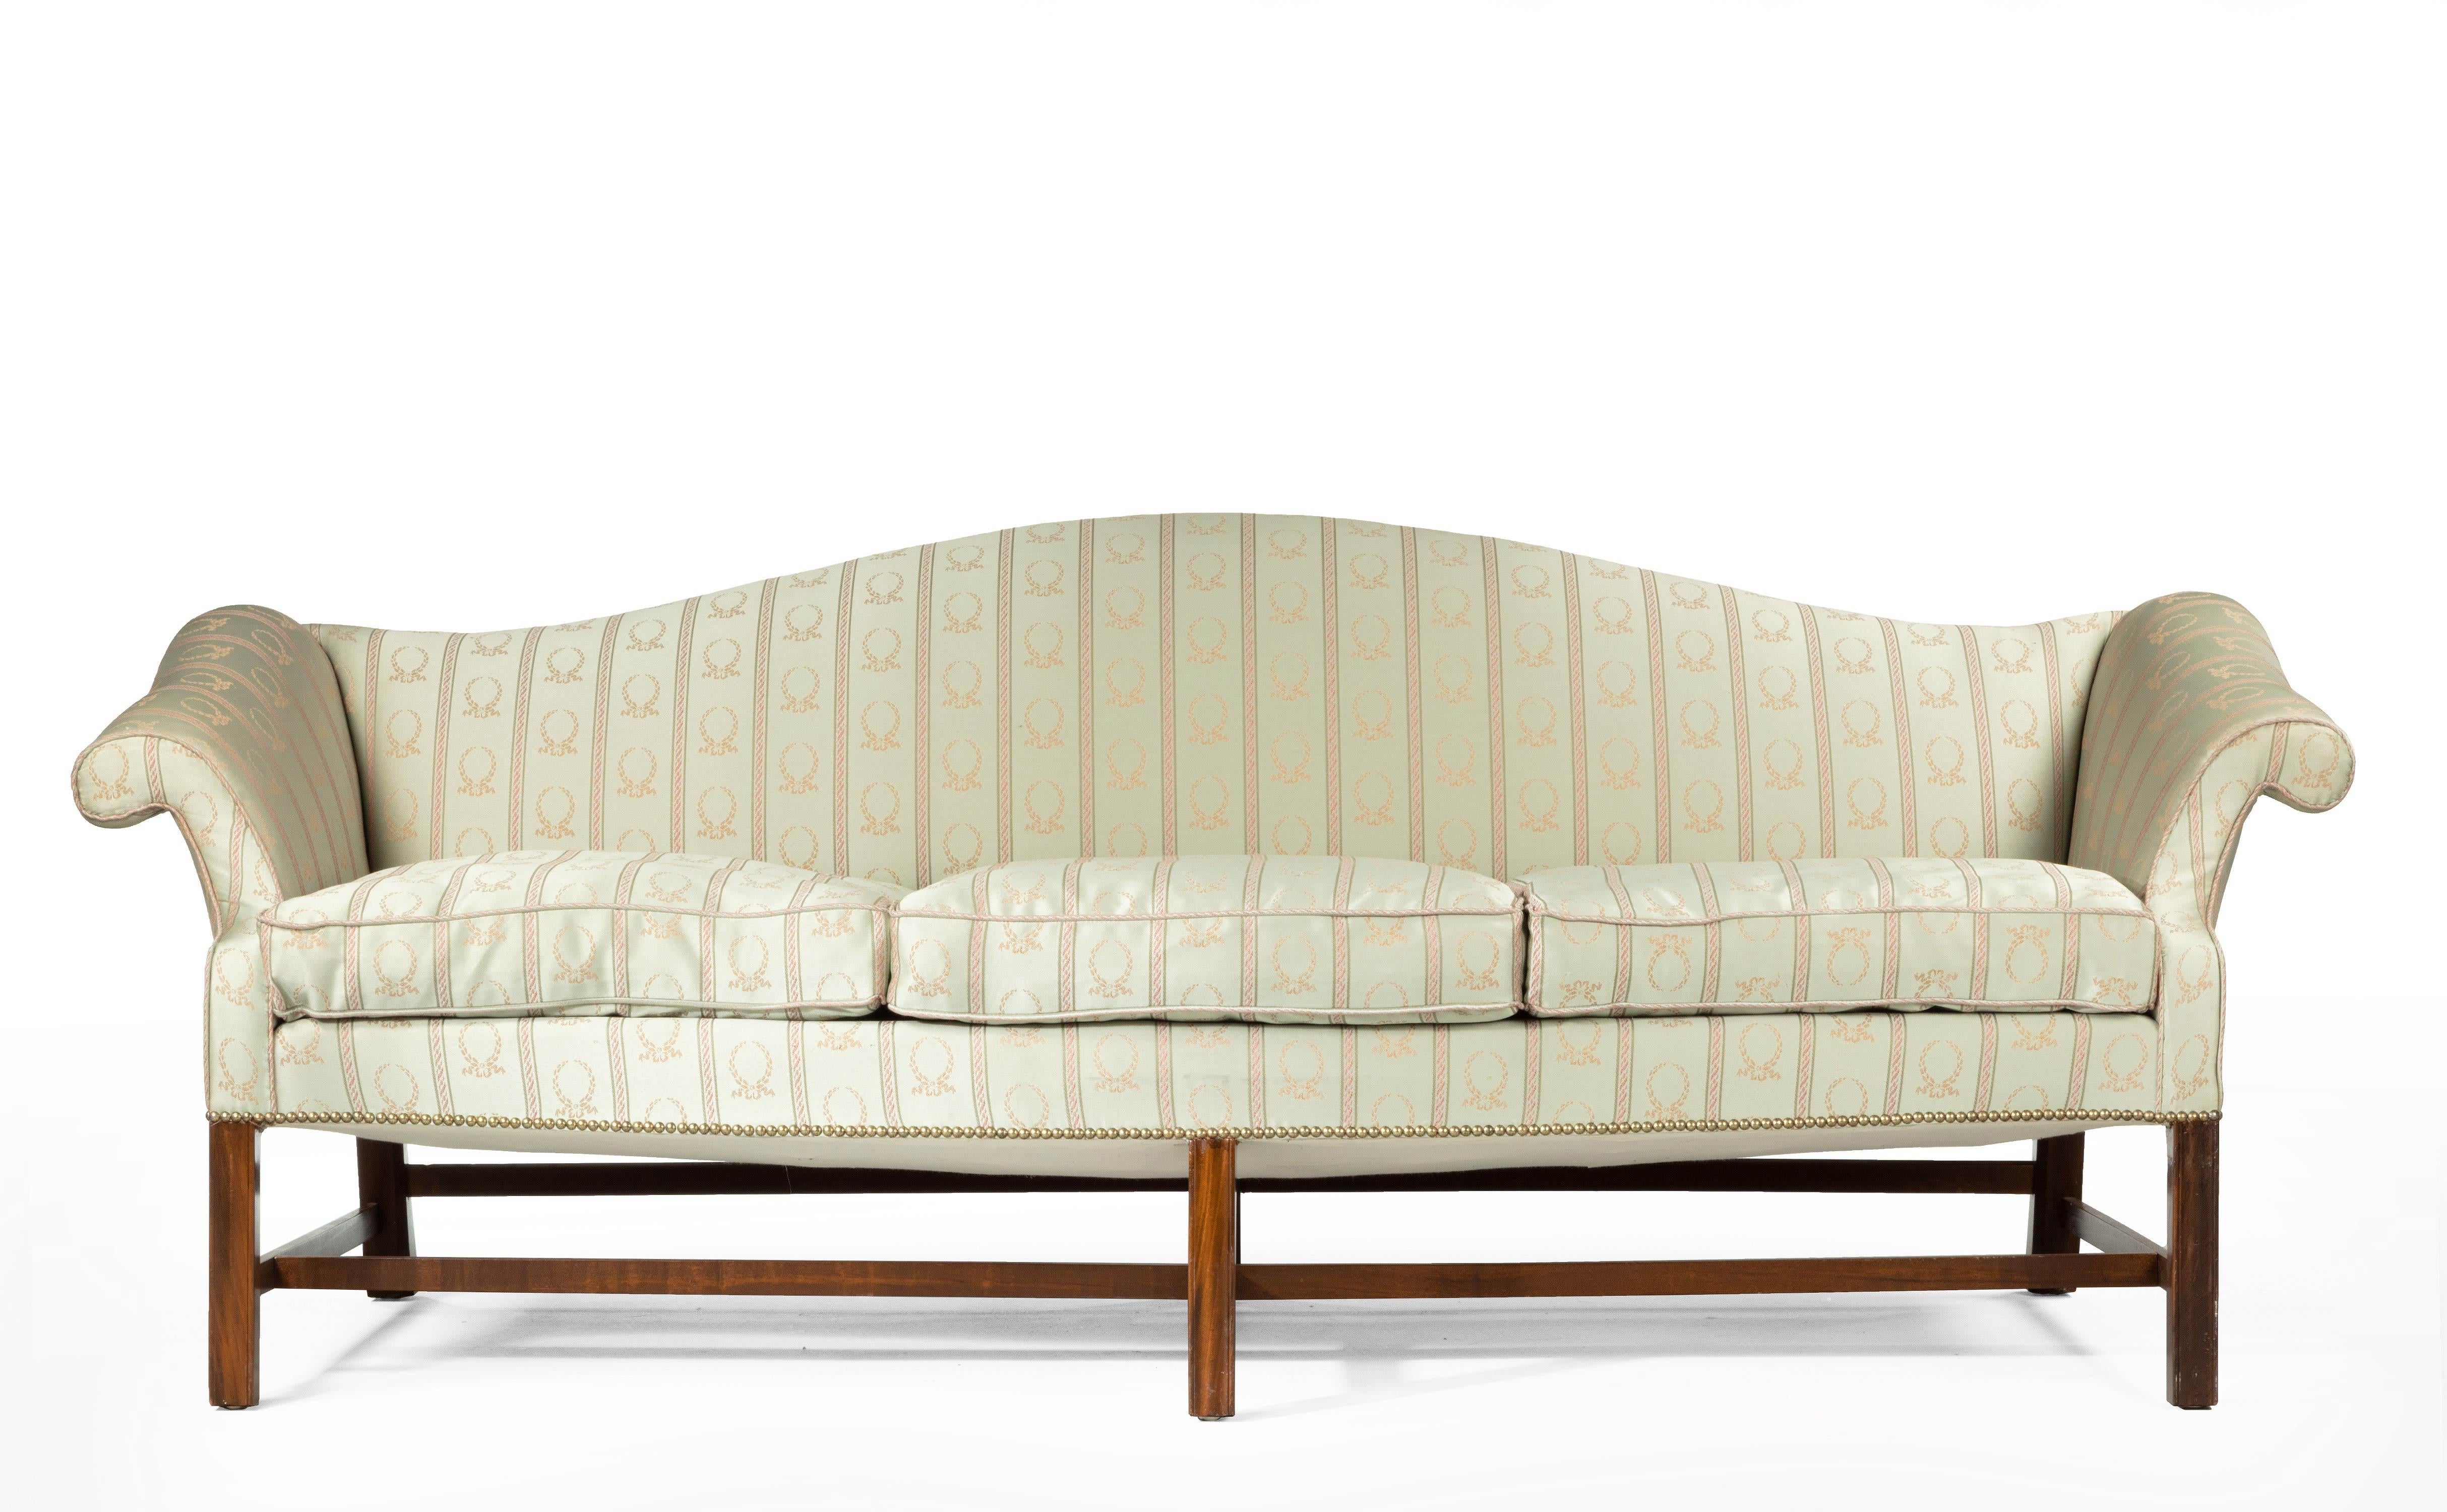 English Mahogany Framed Camelback Sofa of Georgian Design